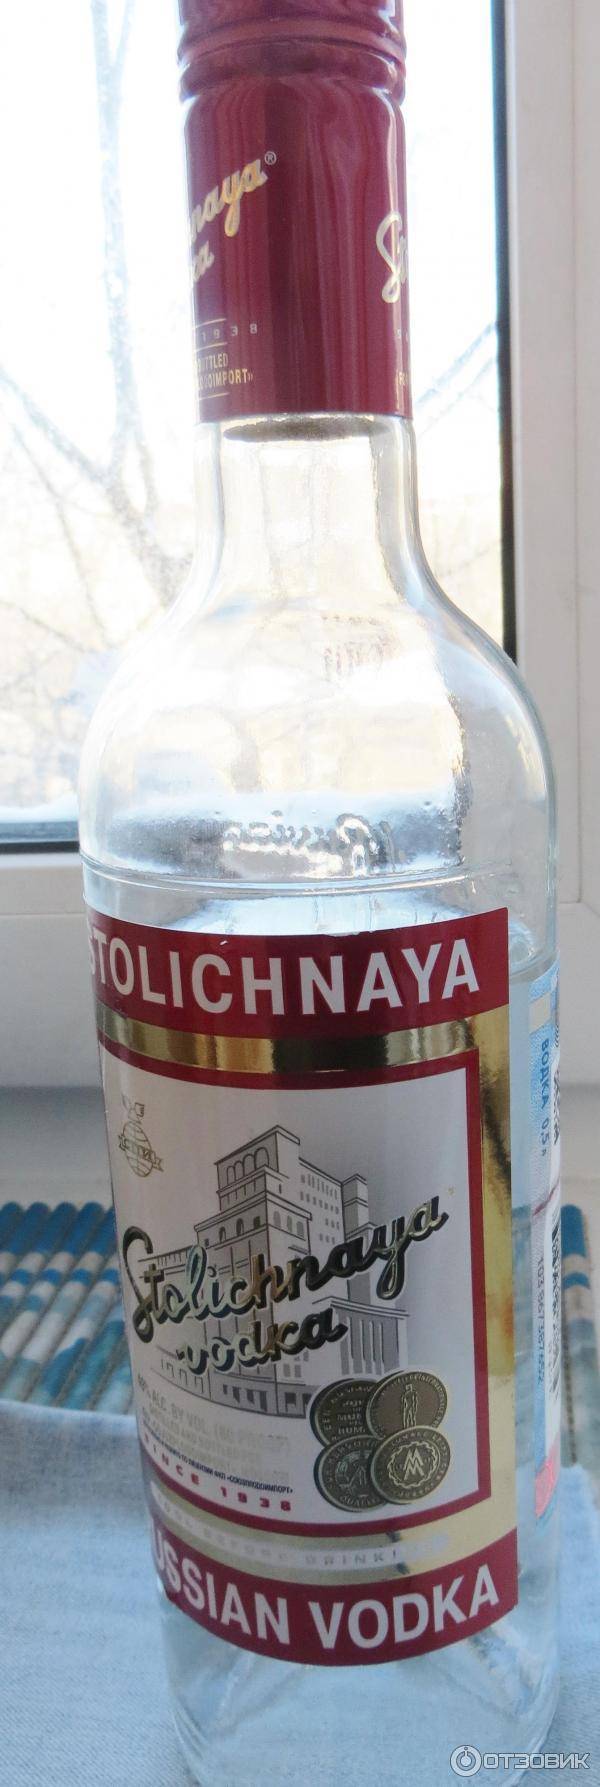 Обзор водки stolichnaya